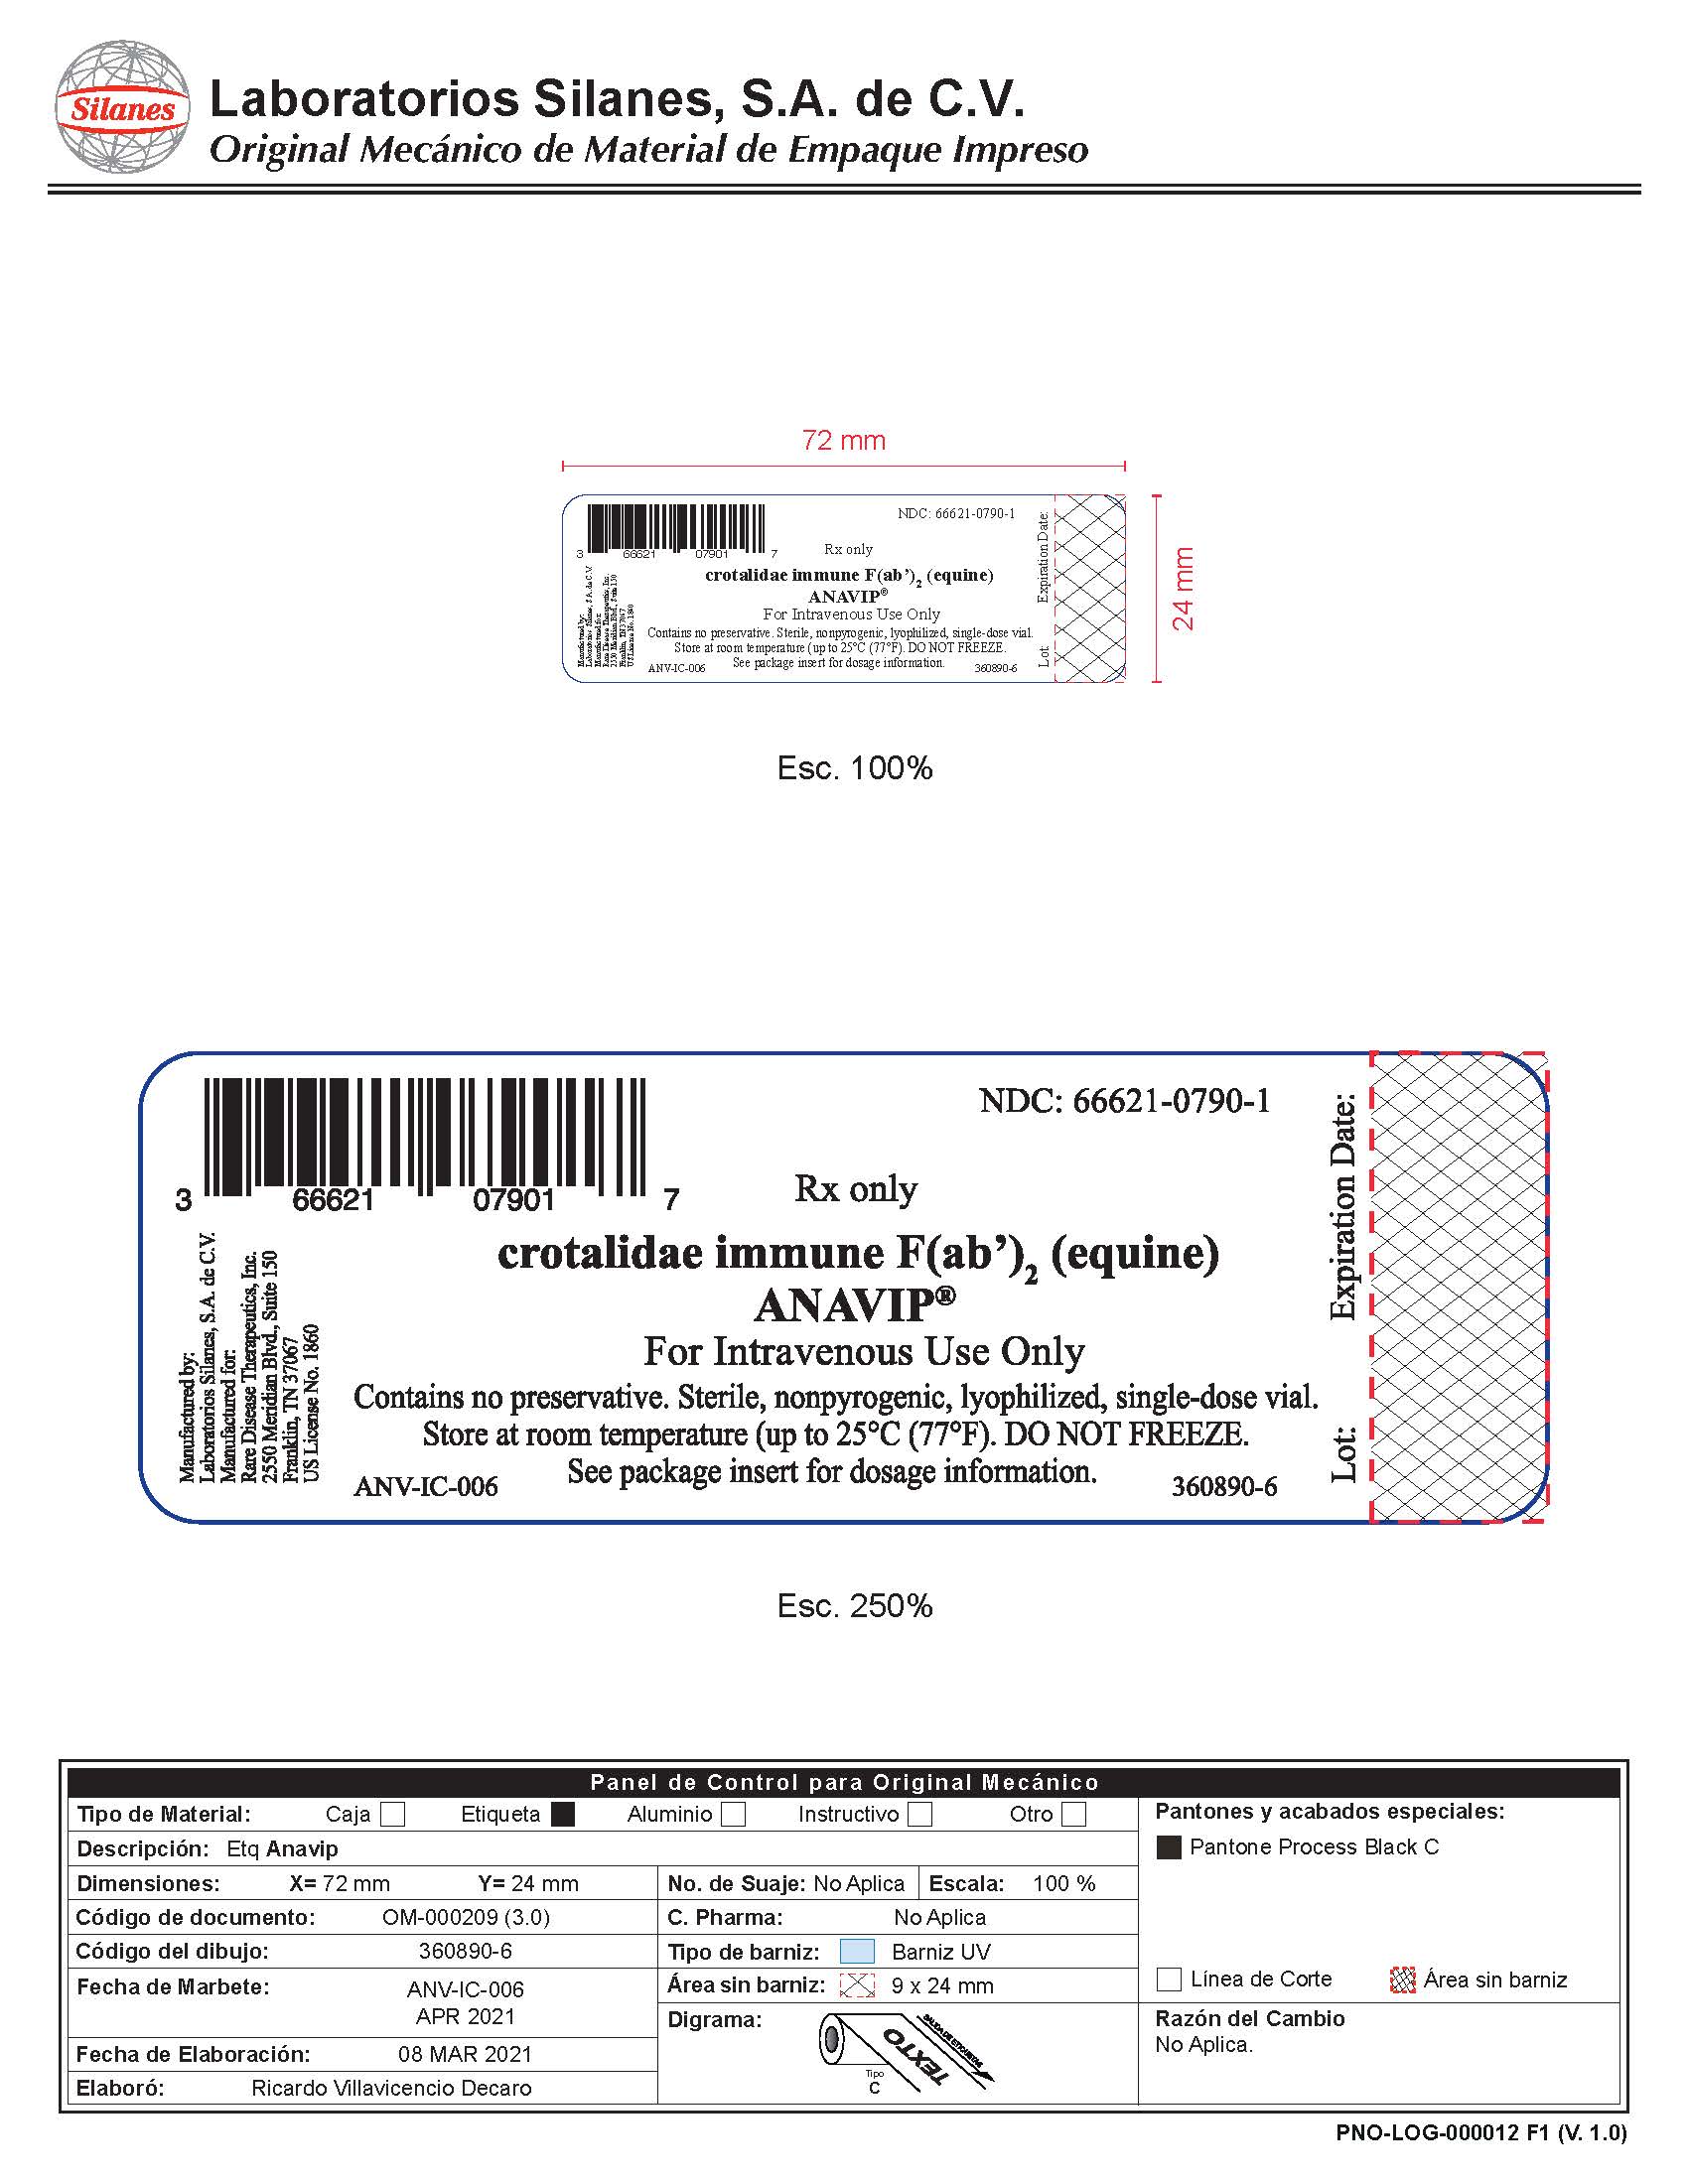 Anavip Vial Label